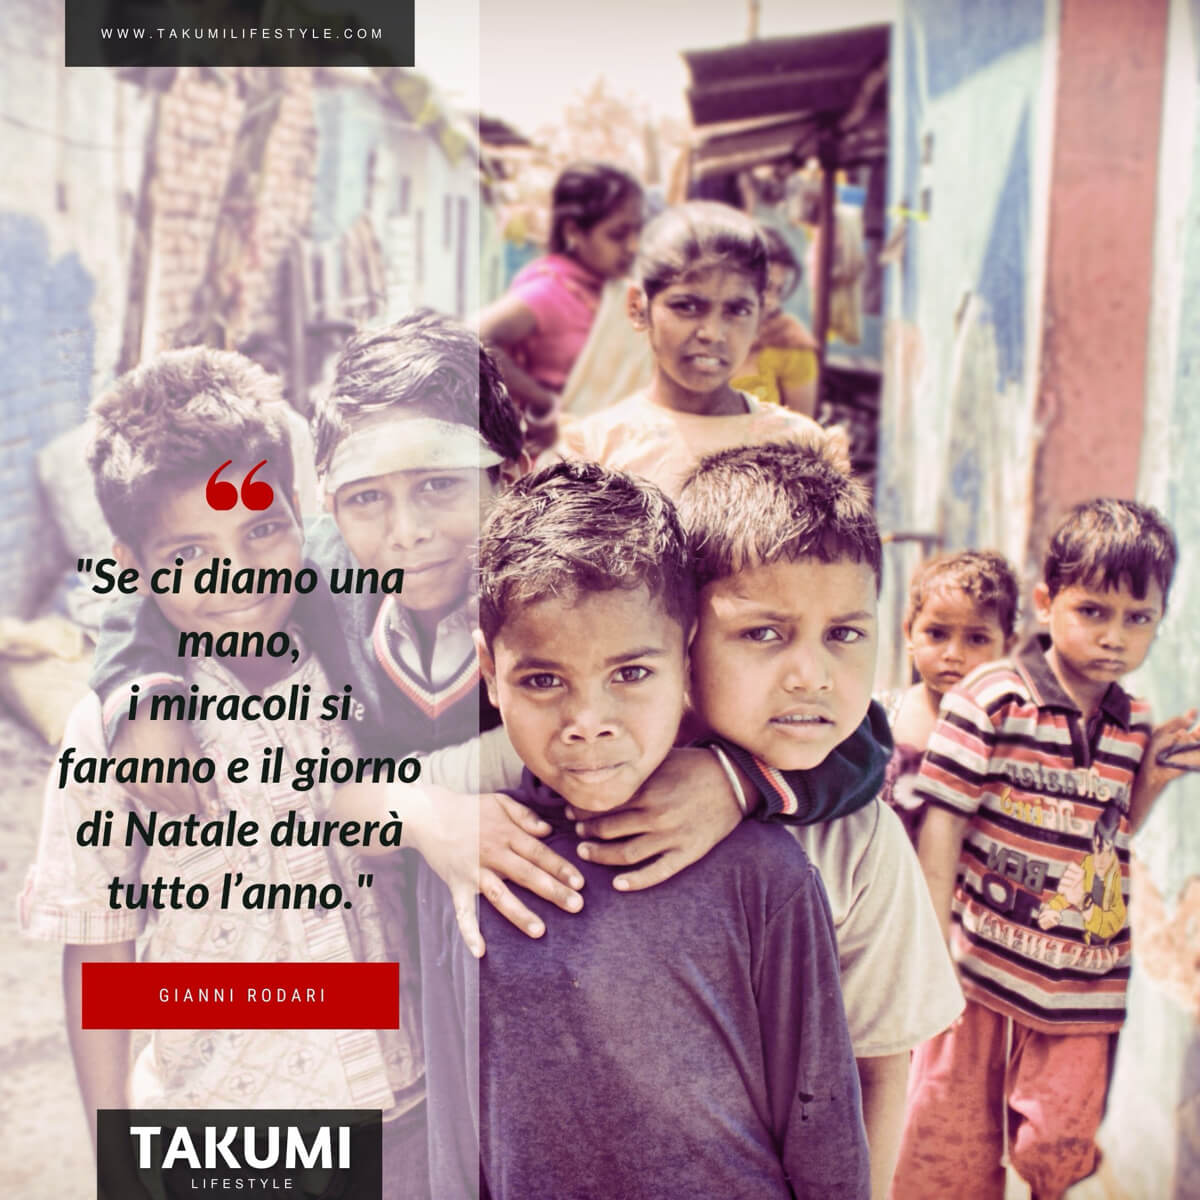 TAKUMI lifestyle - quote#18 Gianni Rodari